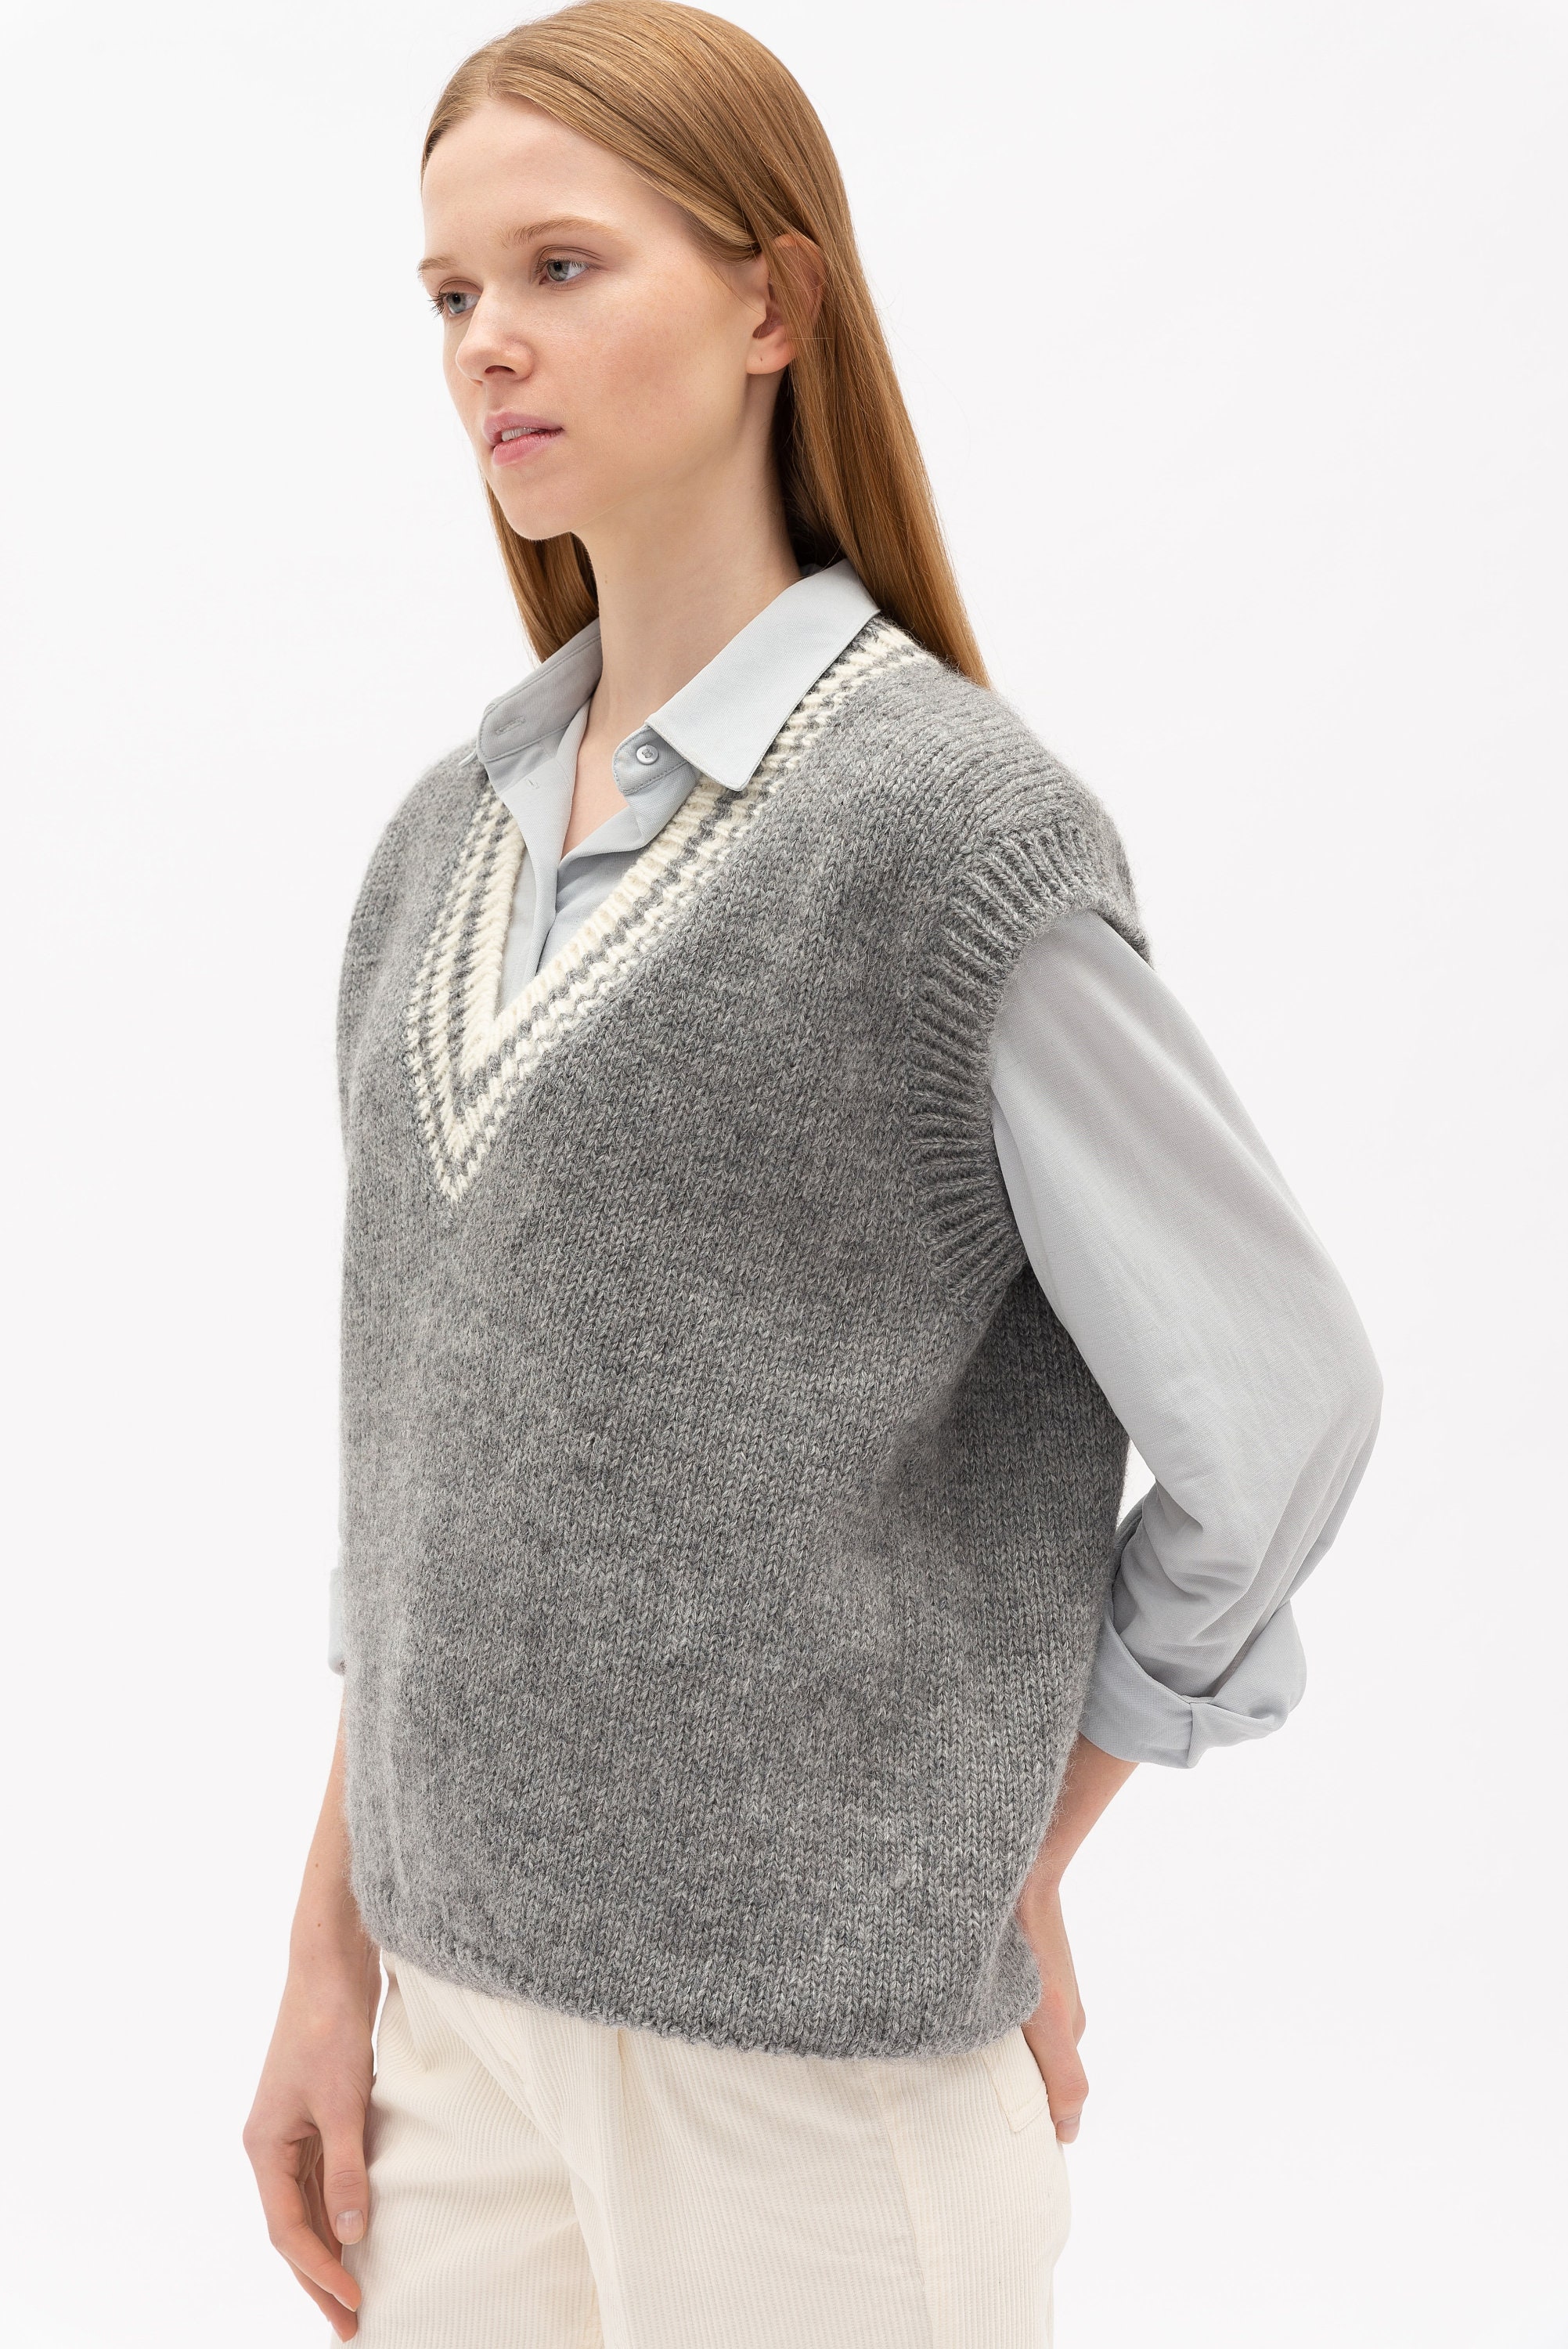 Merino Wool Women's Vest, Hand Knitted Minimalist Vest, Knit Gray Vintage  Woolen Vest, Soft Merino Knit Vest VAIVA 